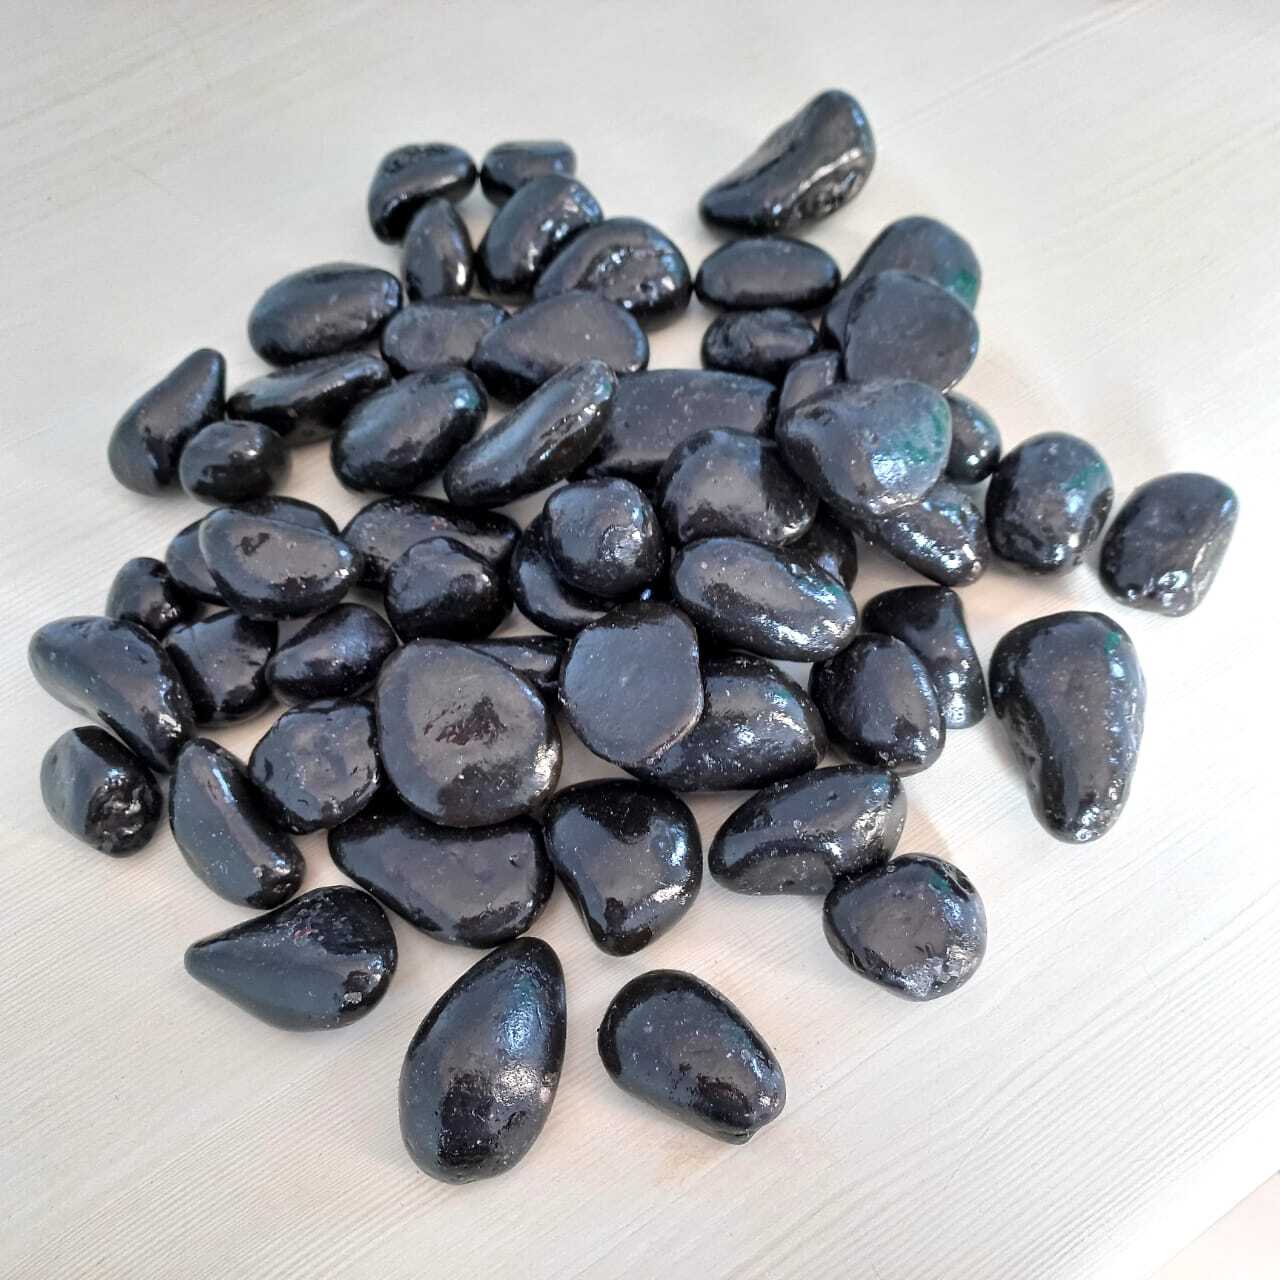 high gloss polyurethane coated super jet black pebbles